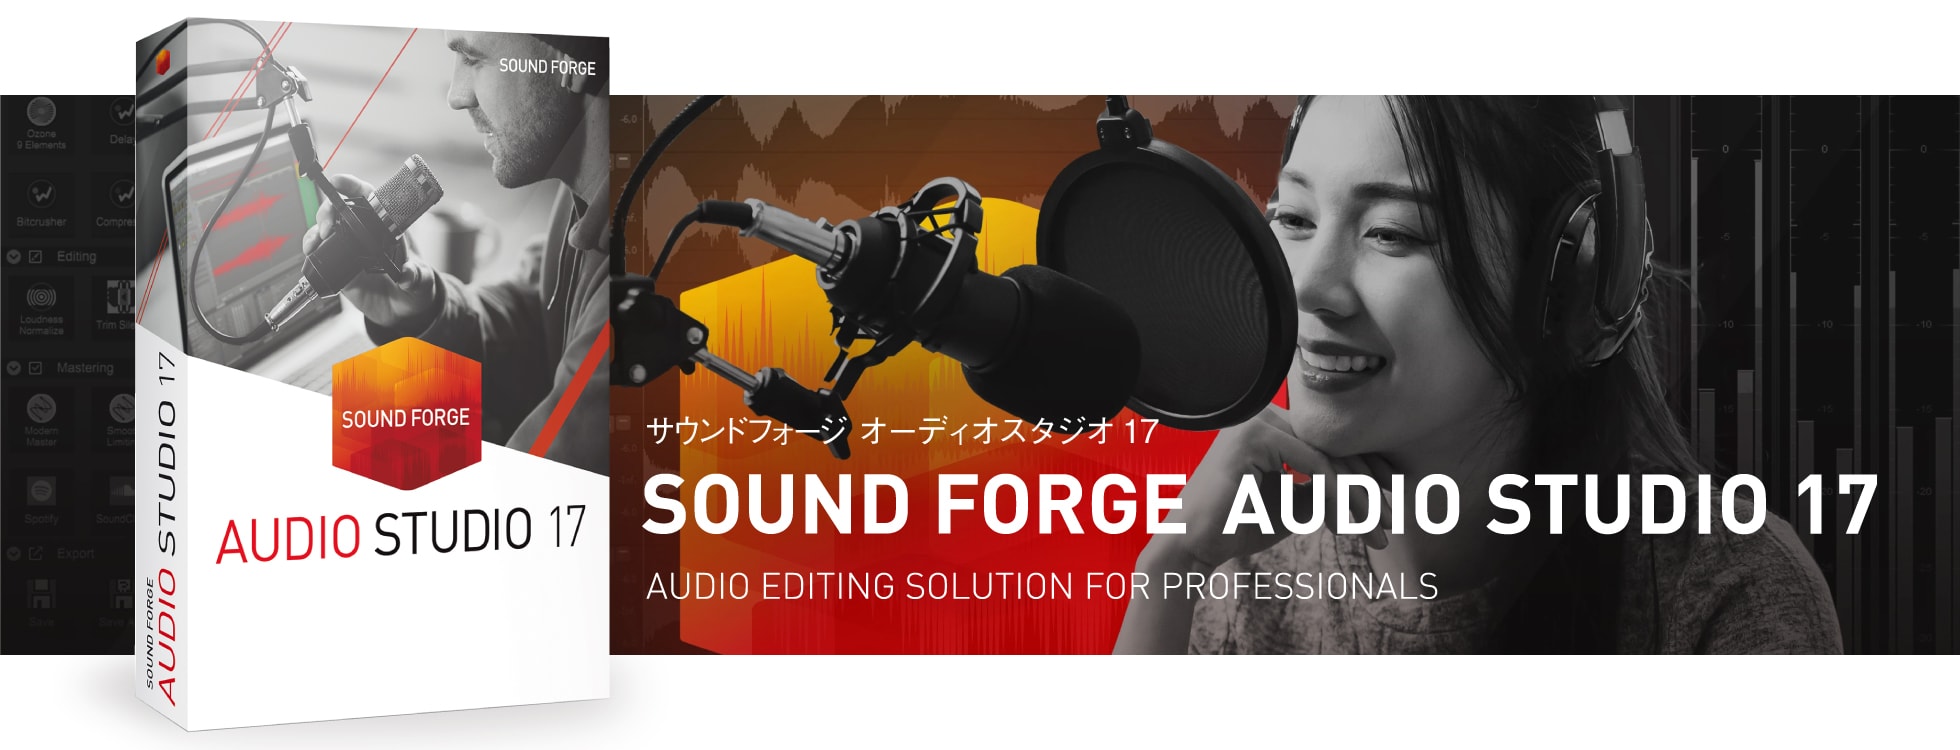 「SOUND FORGE Audio Studio 17」